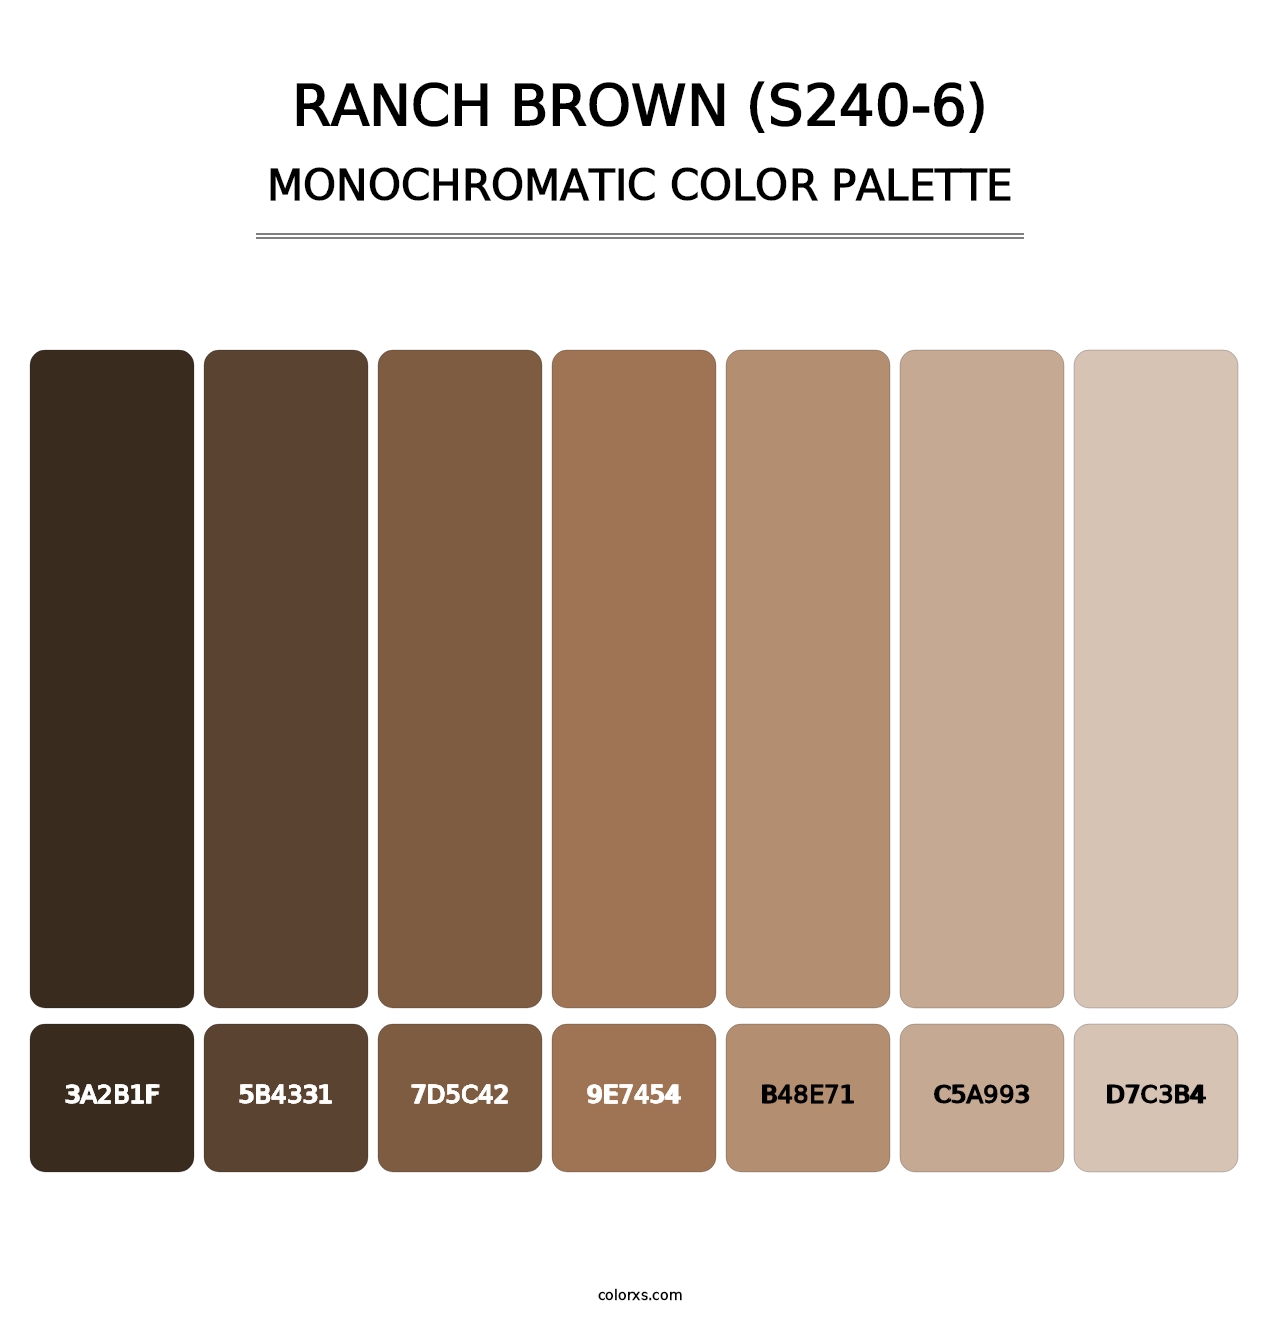 Ranch Brown (S240-6) - Monochromatic Color Palette